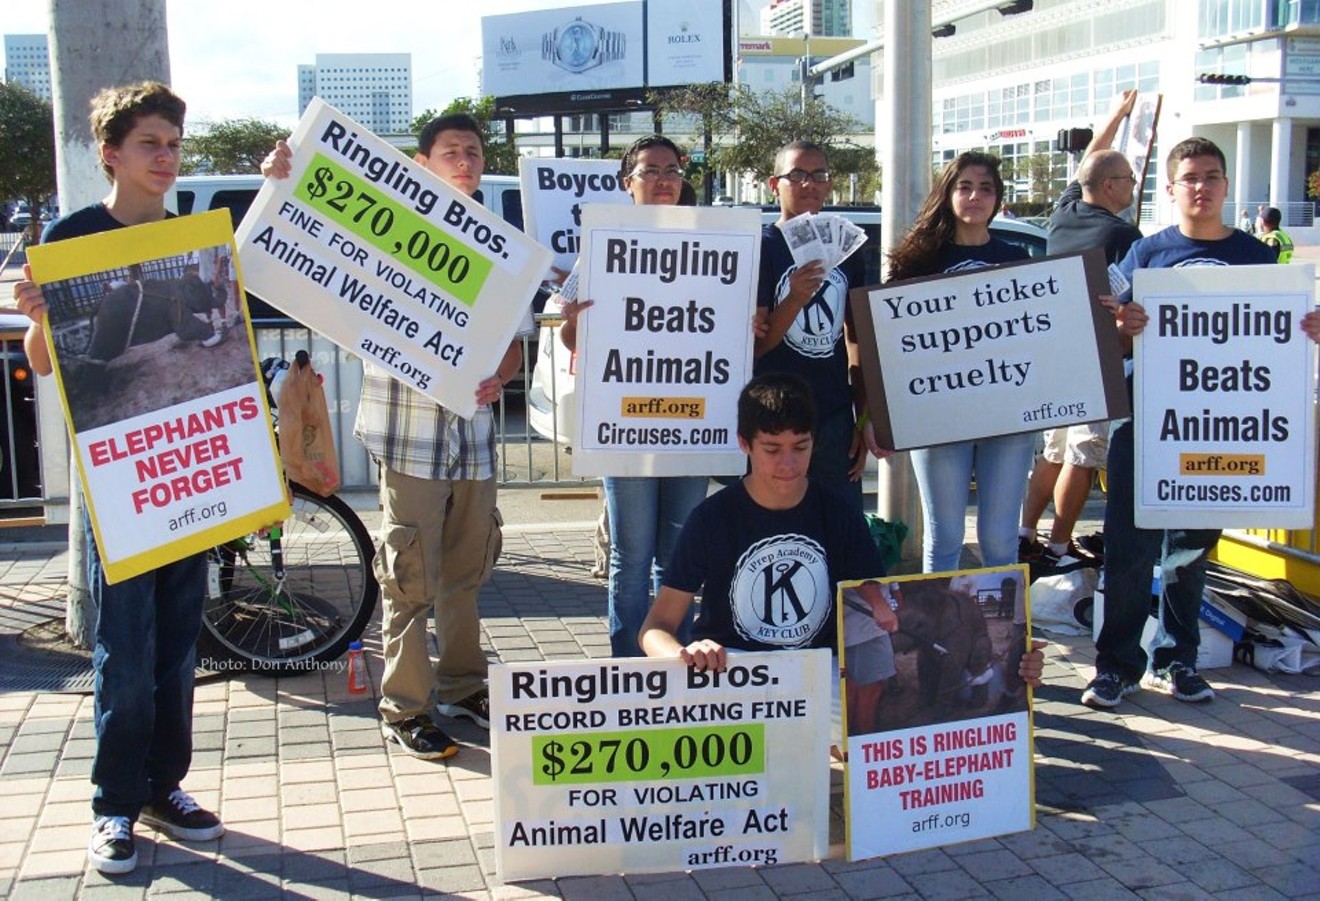 Animal advocates protest Ringling Bros.